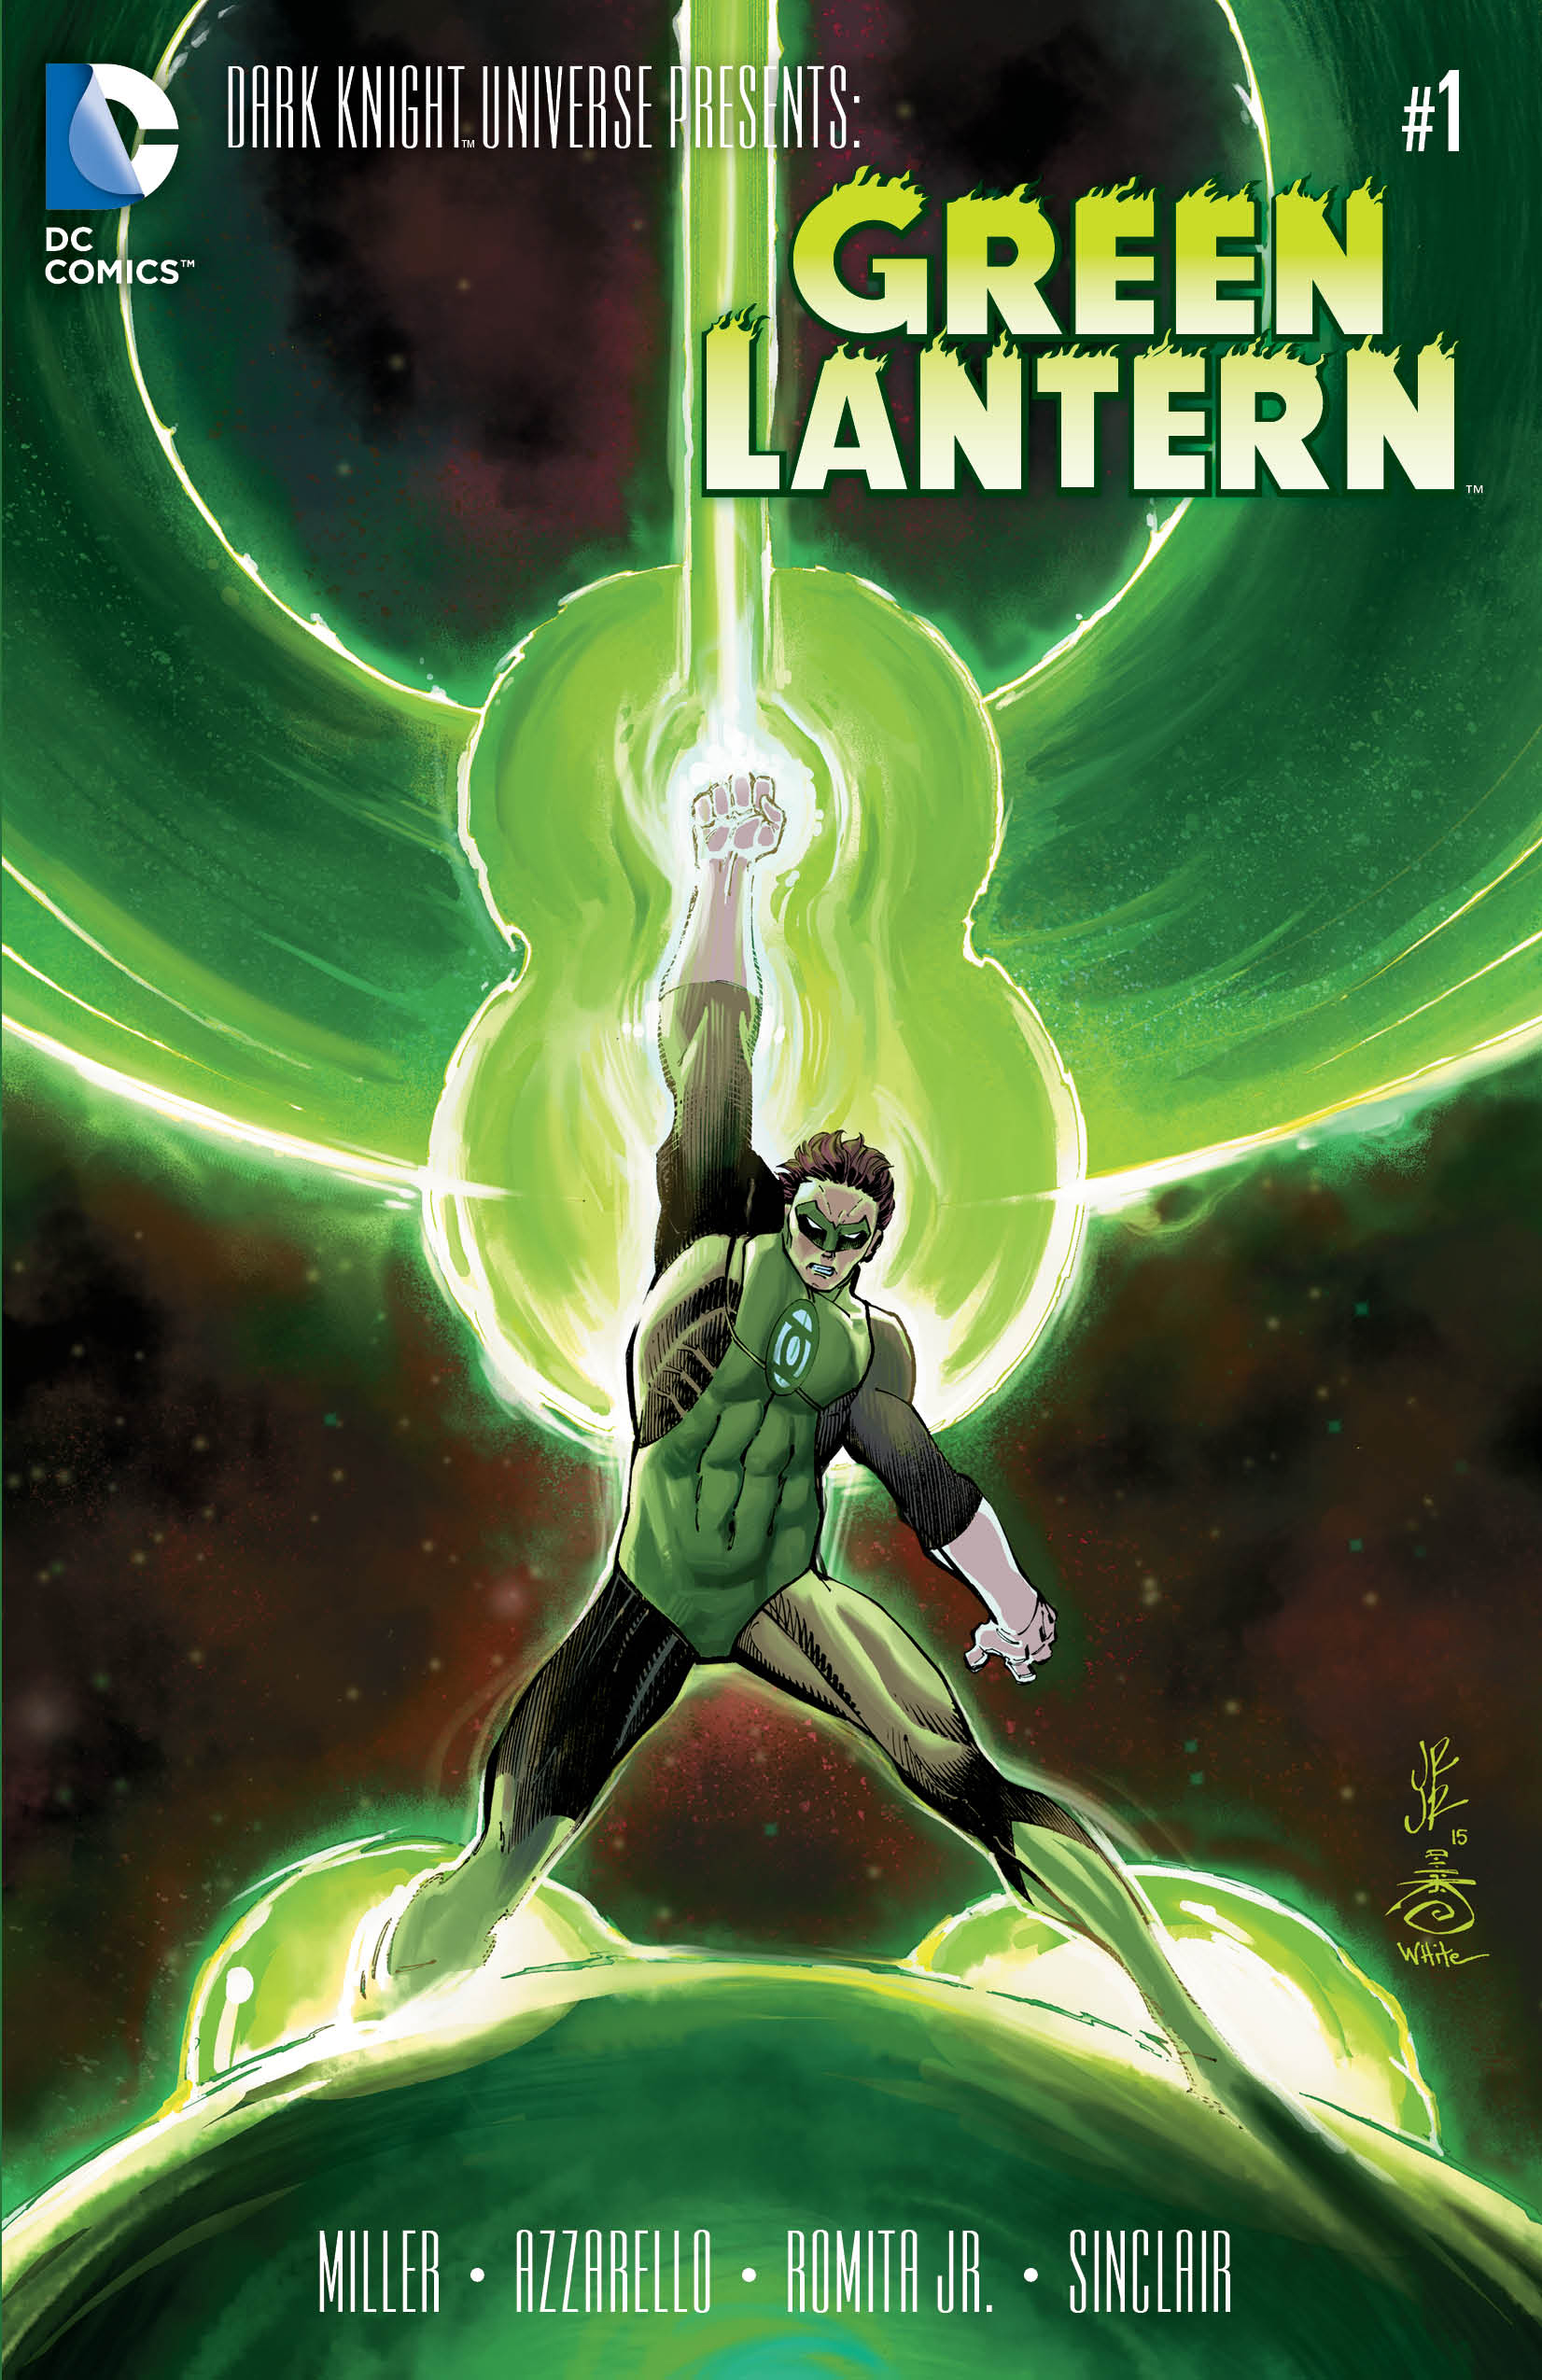 DC Preview: Dark Knight Universe Presents: Green Lantern #1